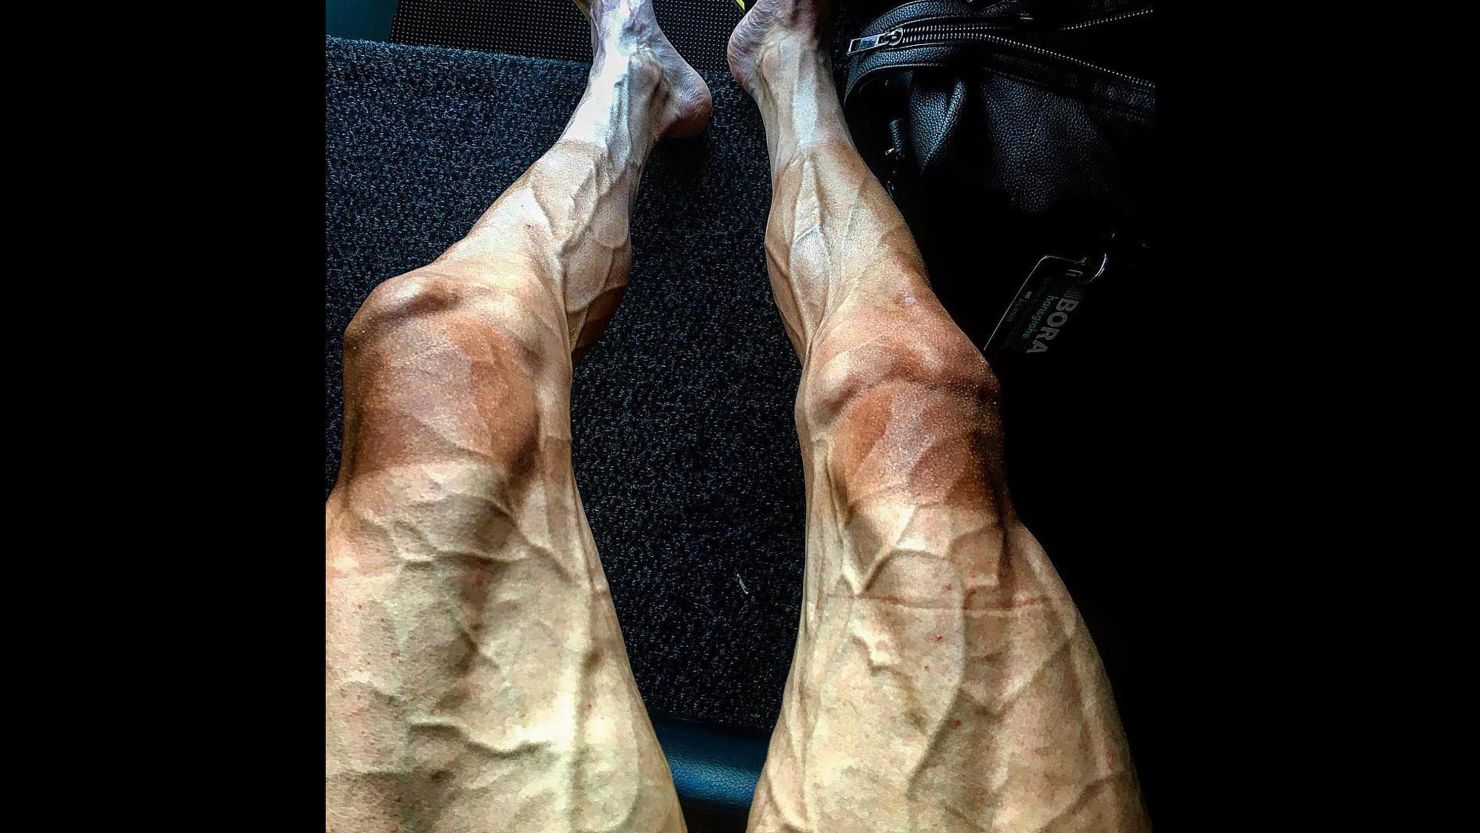 Pawel Poljanski posted a photo of his legs on Instagram.